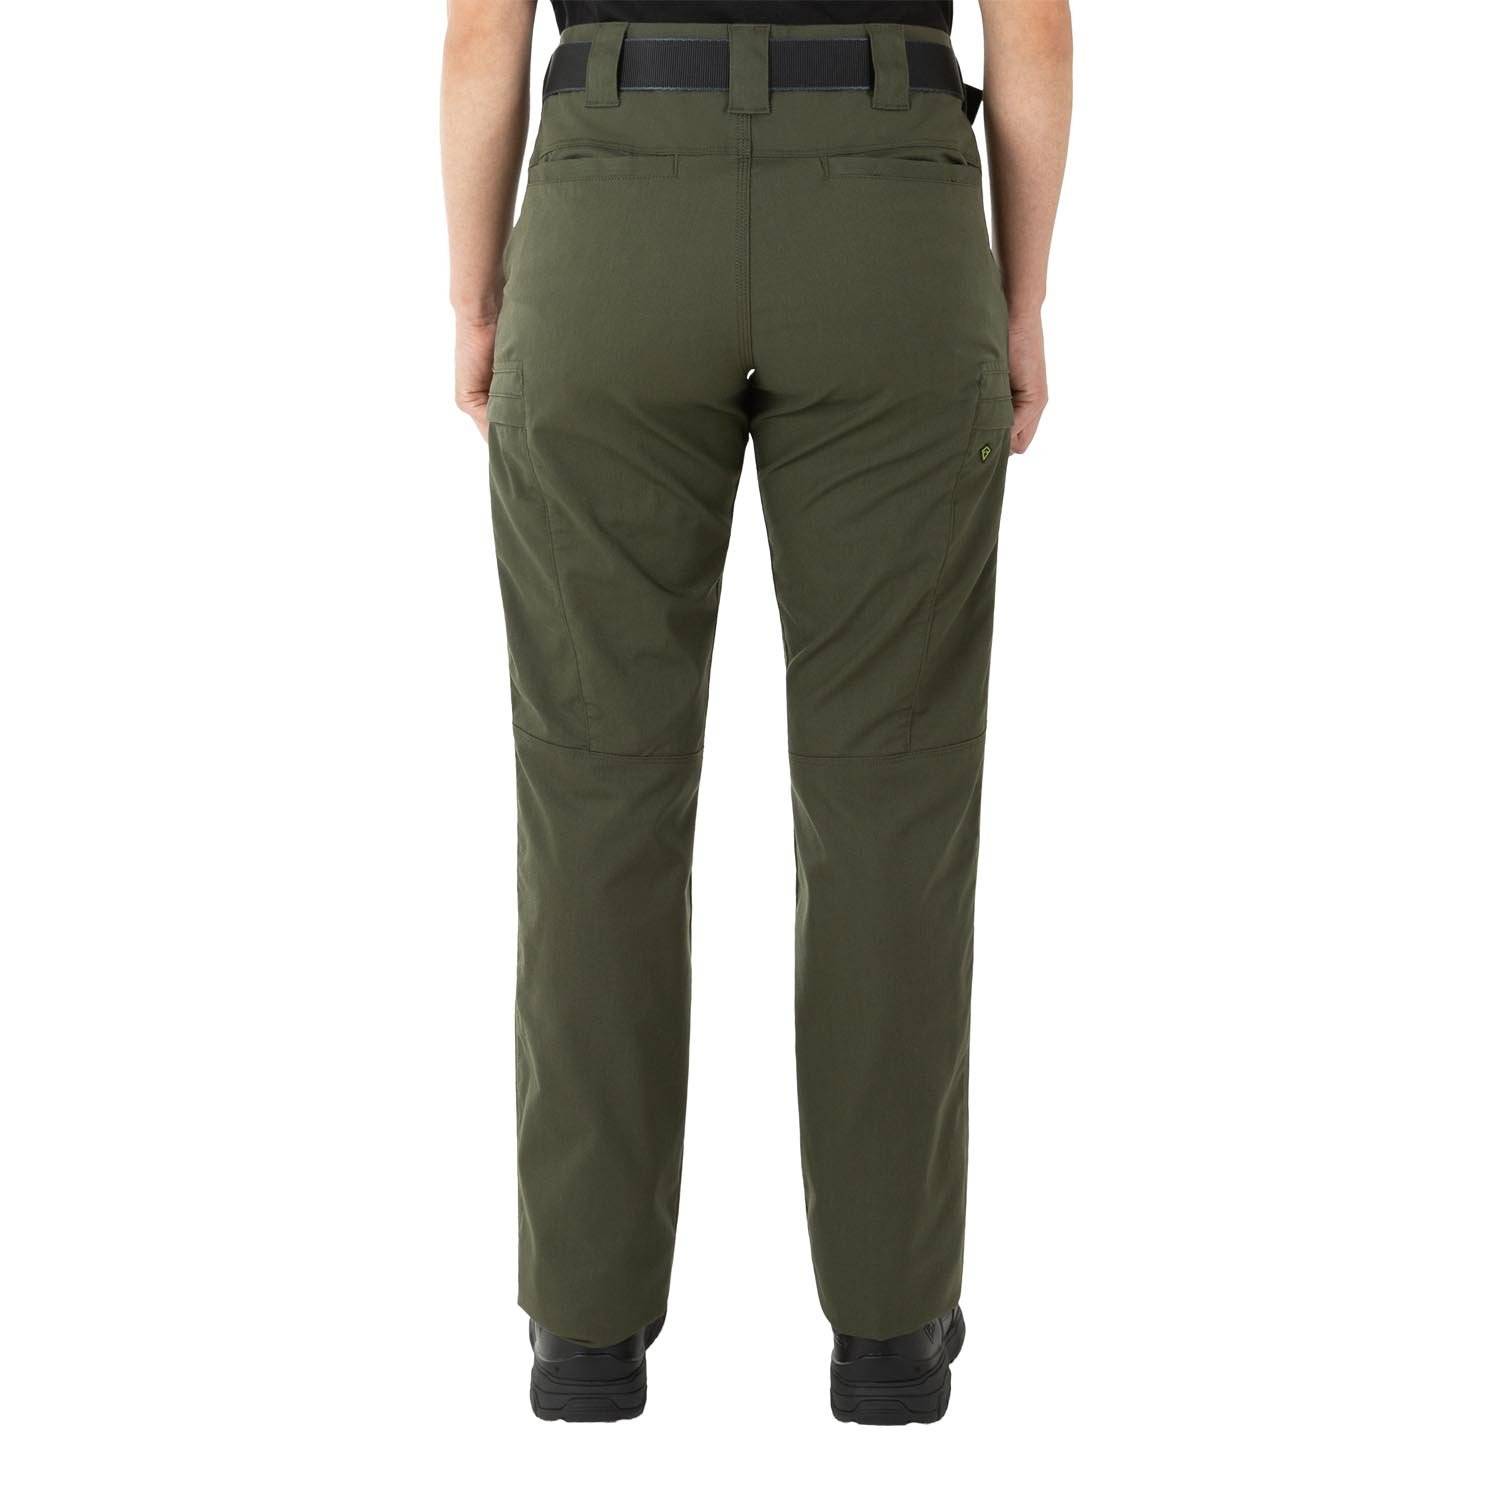 Women's A2 Pants | First Tactical Pants | Galls